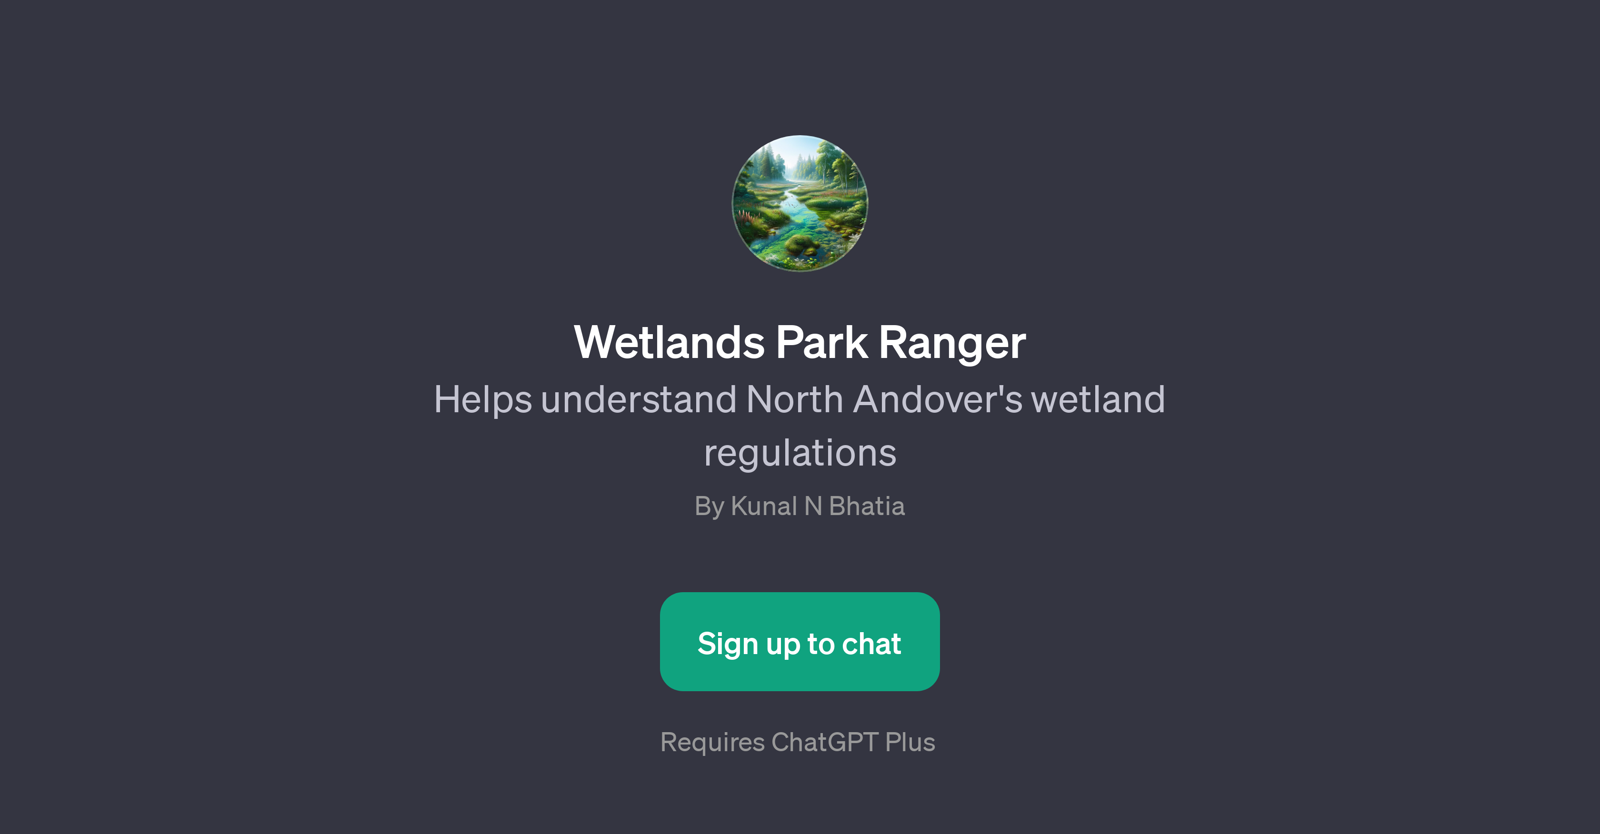 Wetlands Park Ranger website